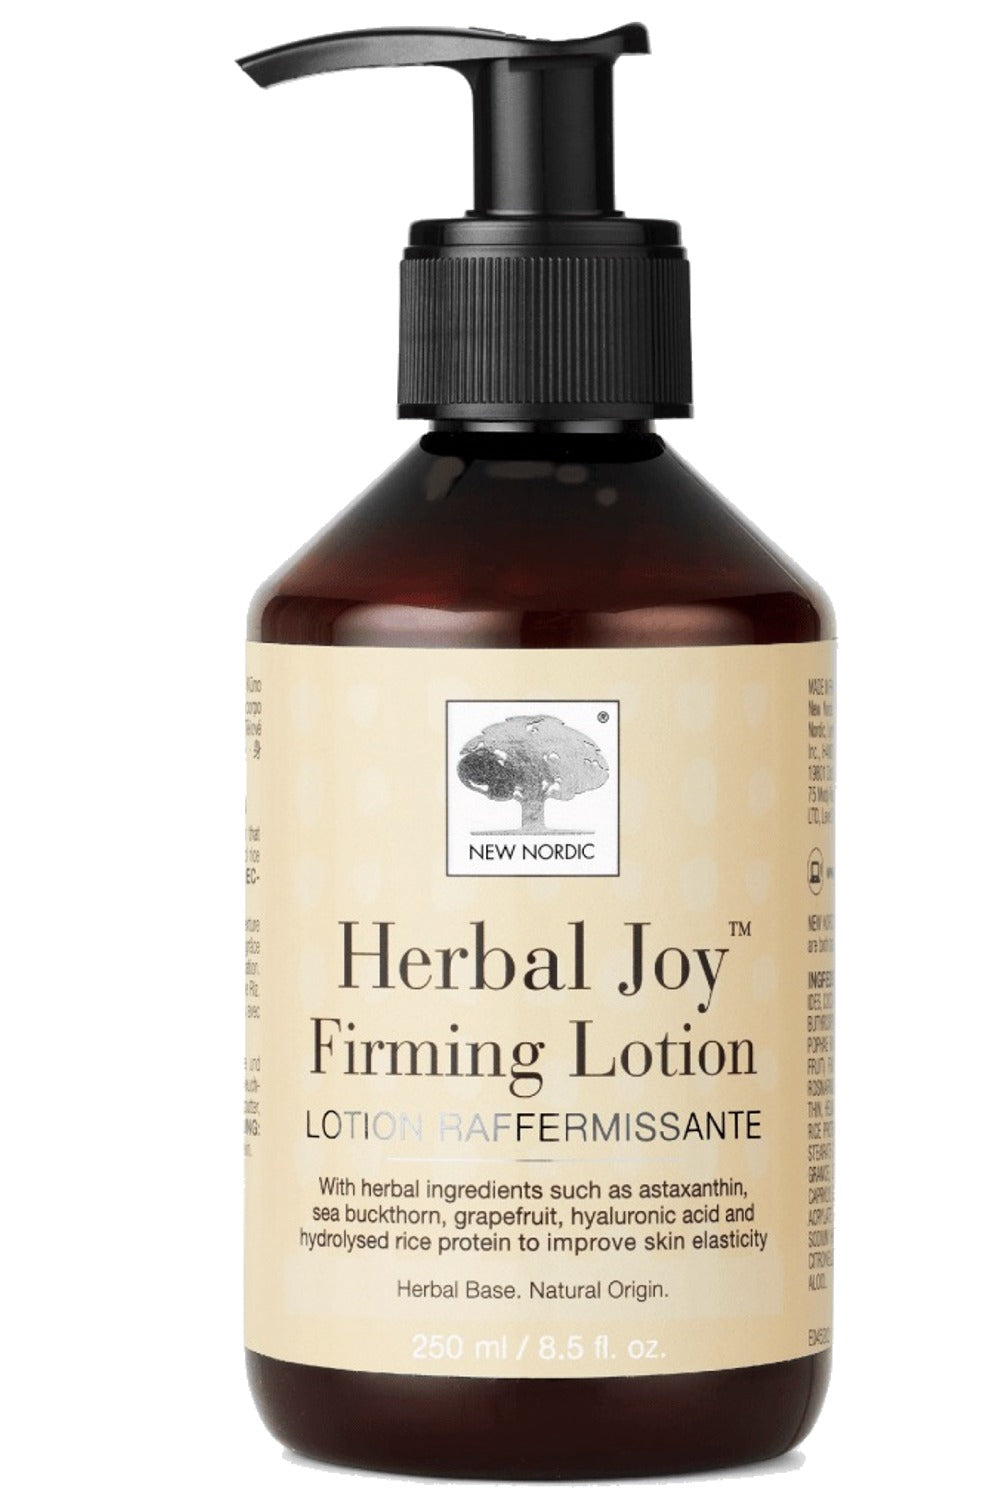 NEW NORDIC Herbal Joy Firming Lotion (250 ml)